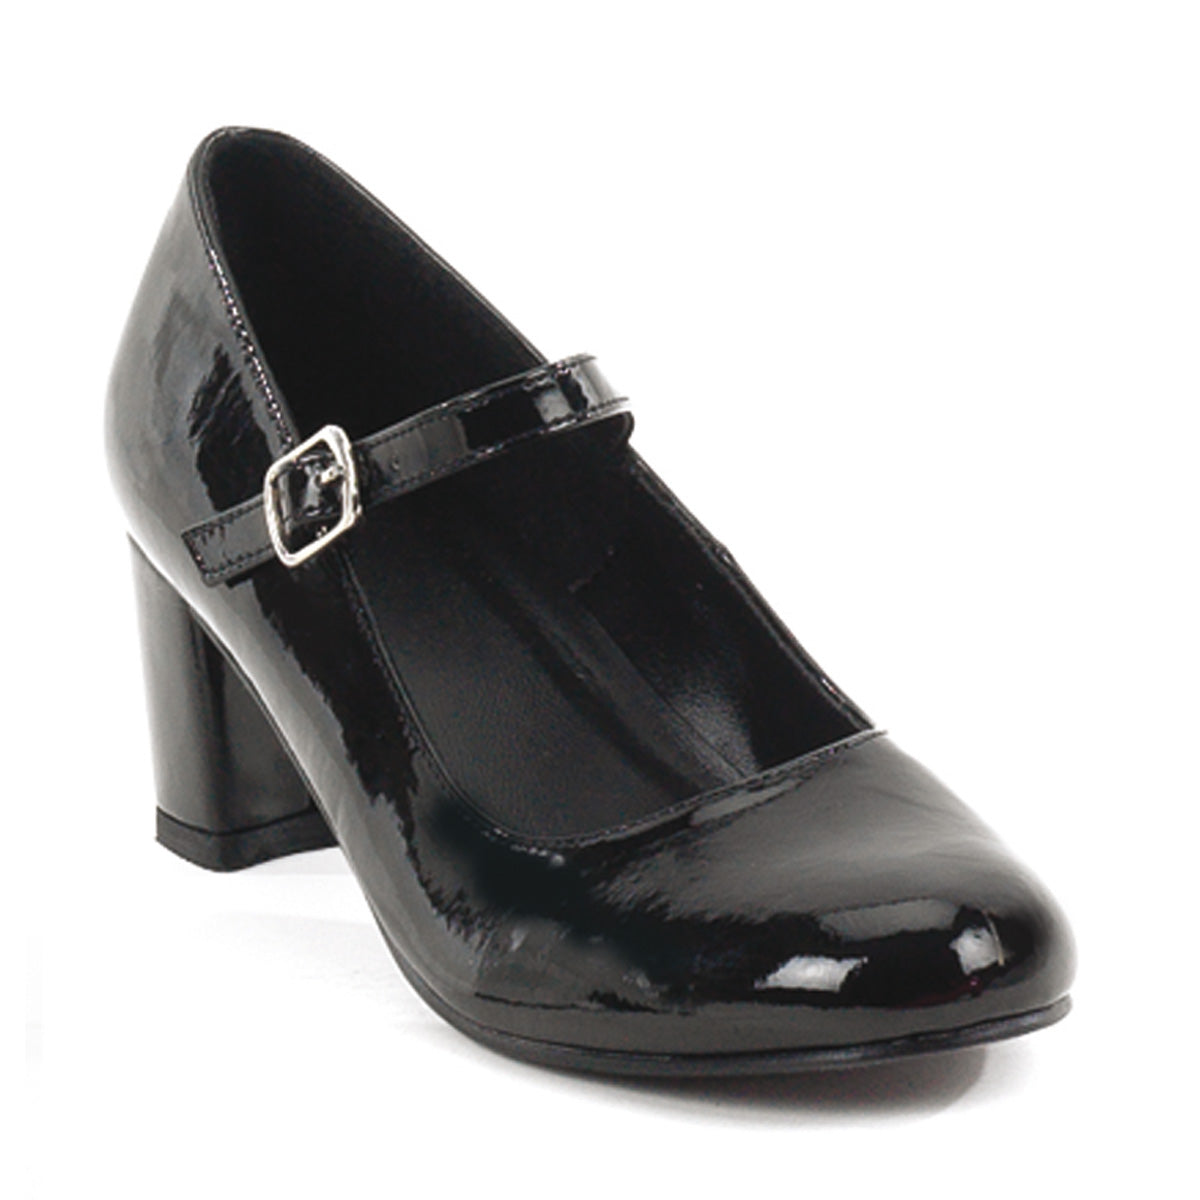 SCHOOLGIRL-50 2 Inch Heel Black Costume Shoes Funtasma Costume Shoes